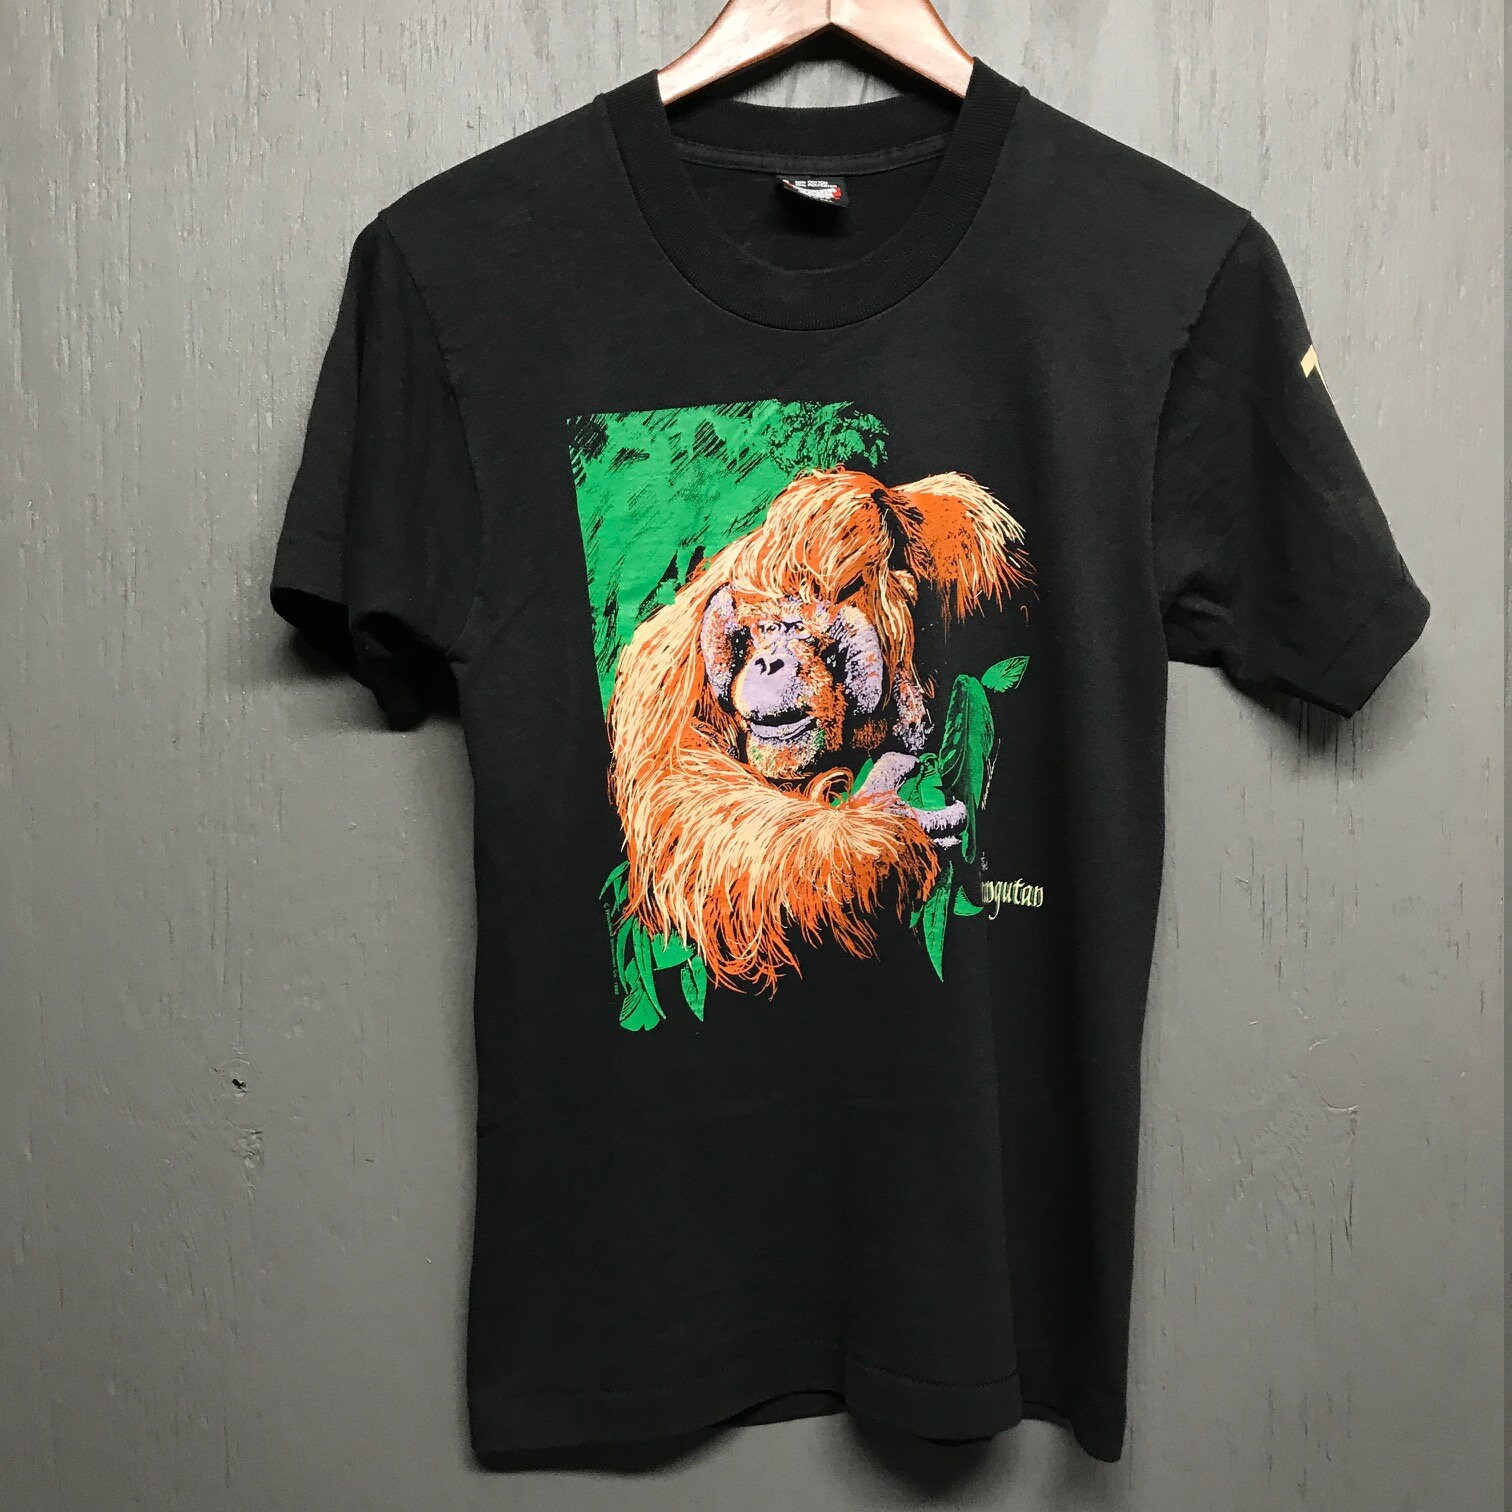 S vtg 90s 1992 Orangutan Seneca Park zoo screen stars t shirt